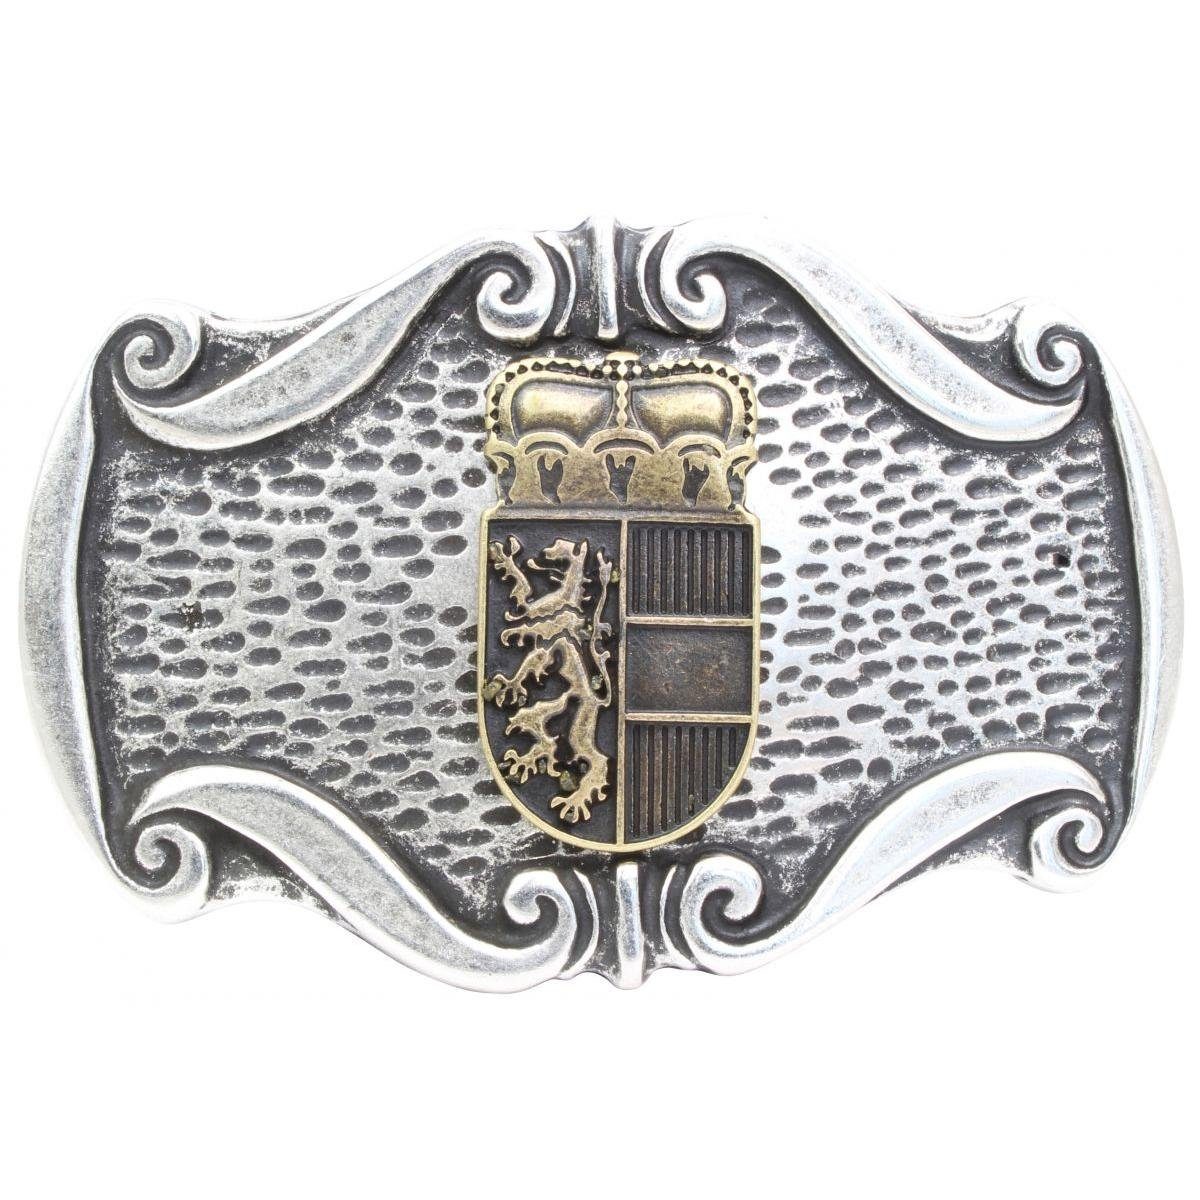 BELTINGER Gürtelschnalle Wappen Salzburg 4,0 cm - Buckle Wechselschließe Gürtelschließe 40mm - bicolor s/g